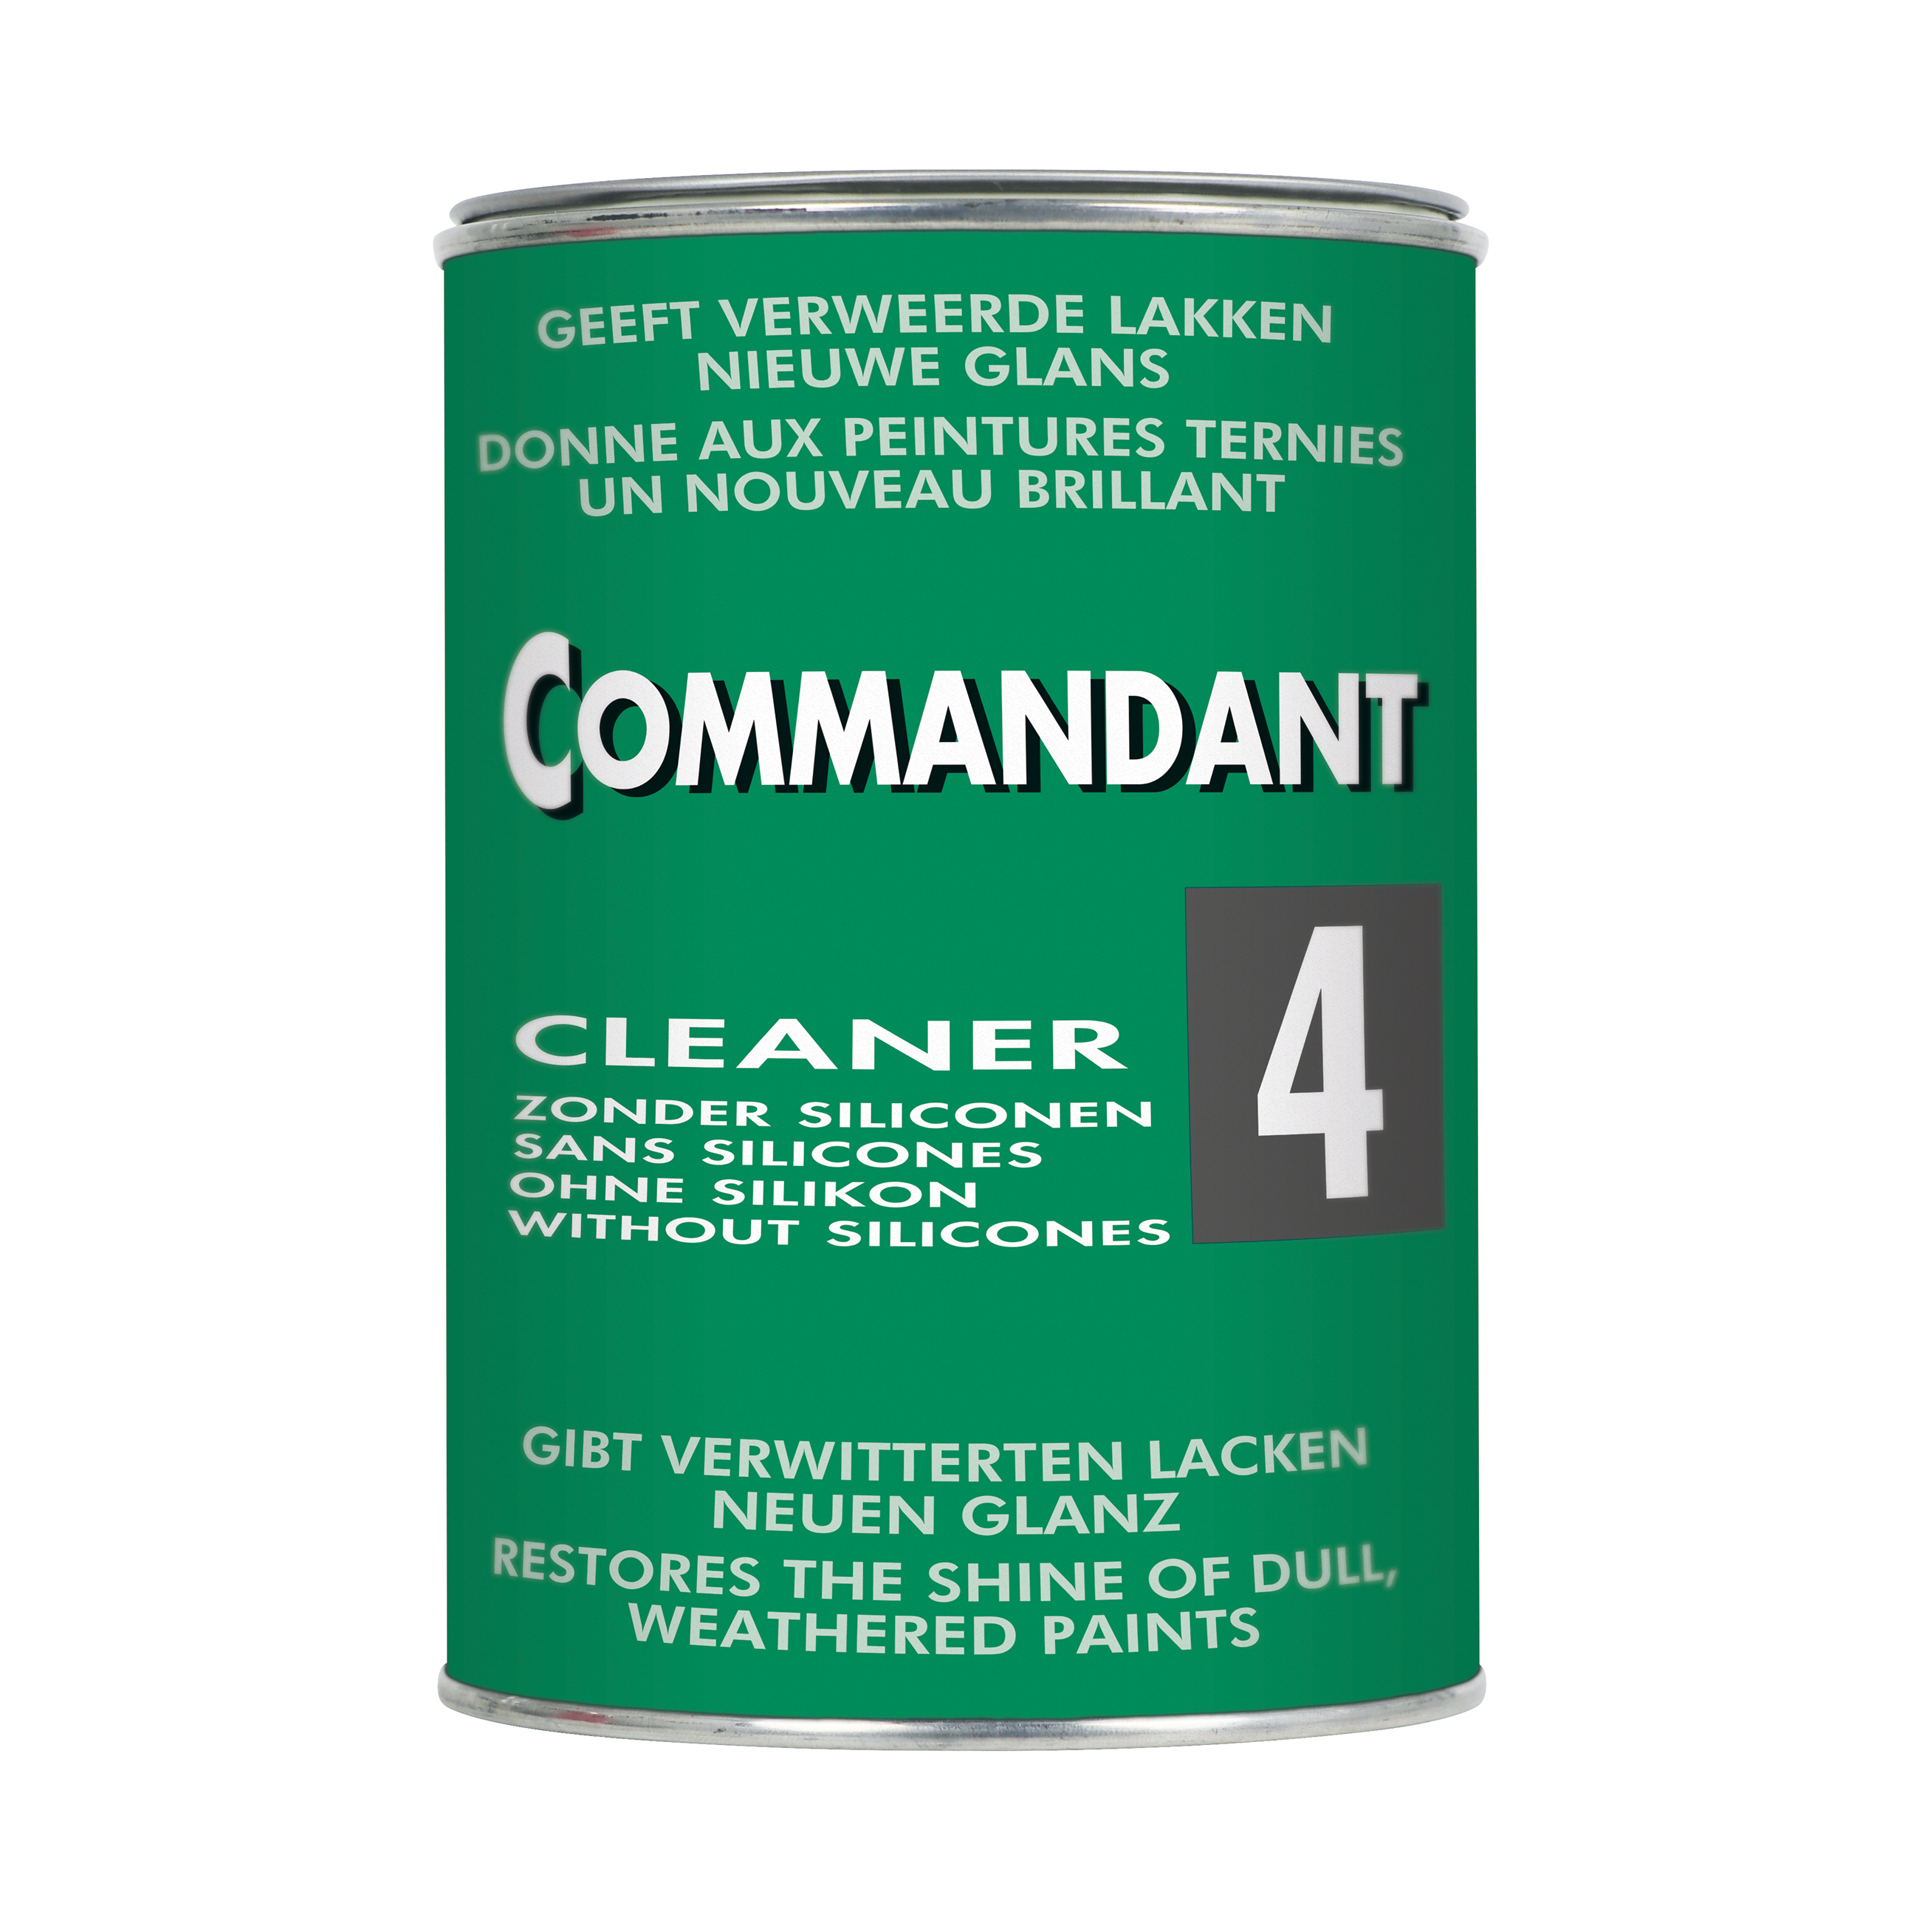 Image of Commandant Commandant Cleaner 4 1kg 1830597 1830597_615